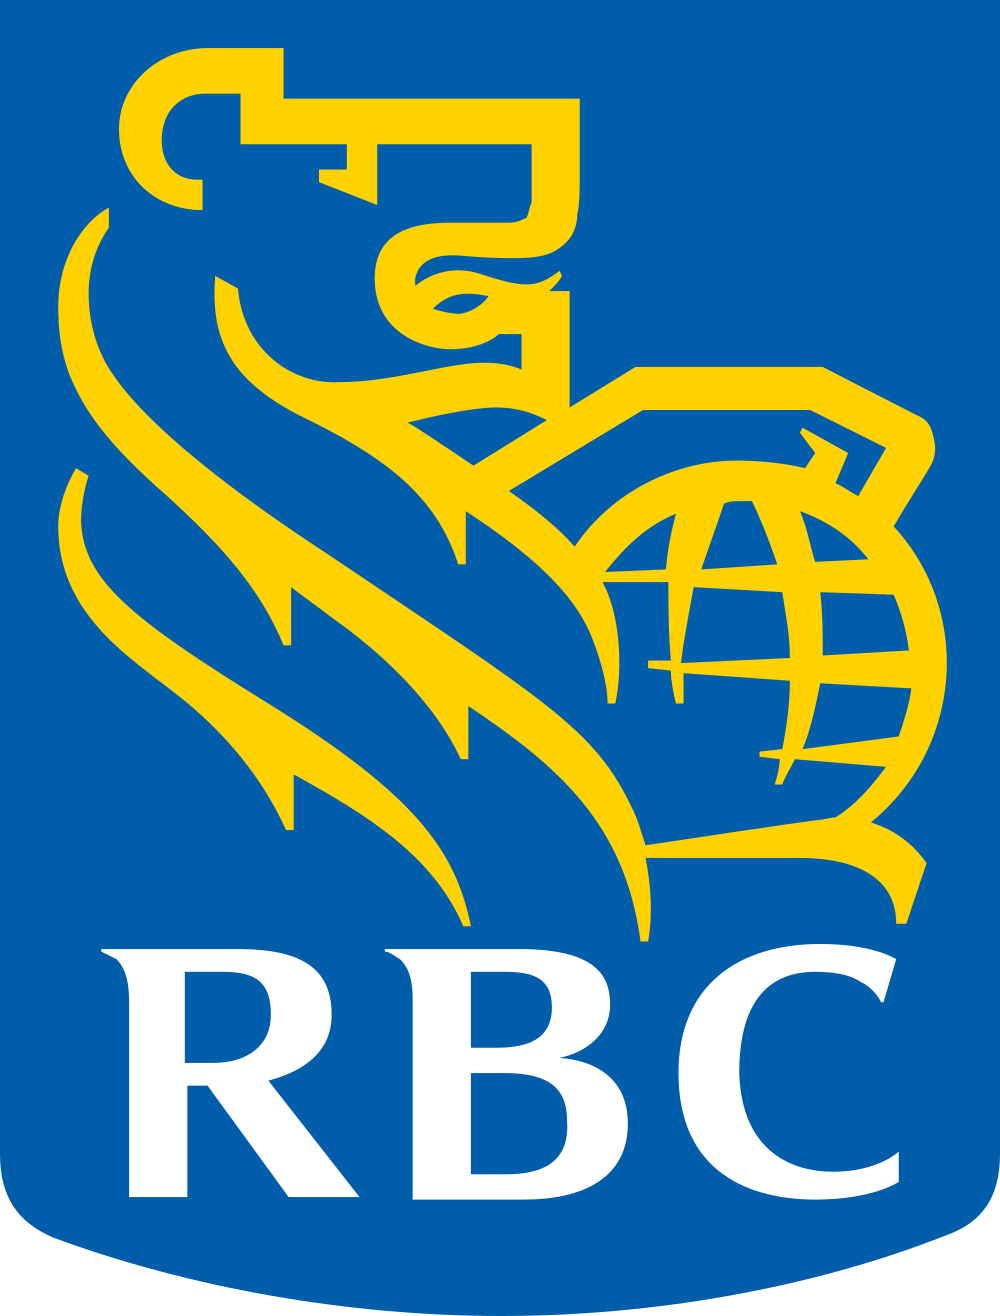 Royal Bank of Canada logo png transparent